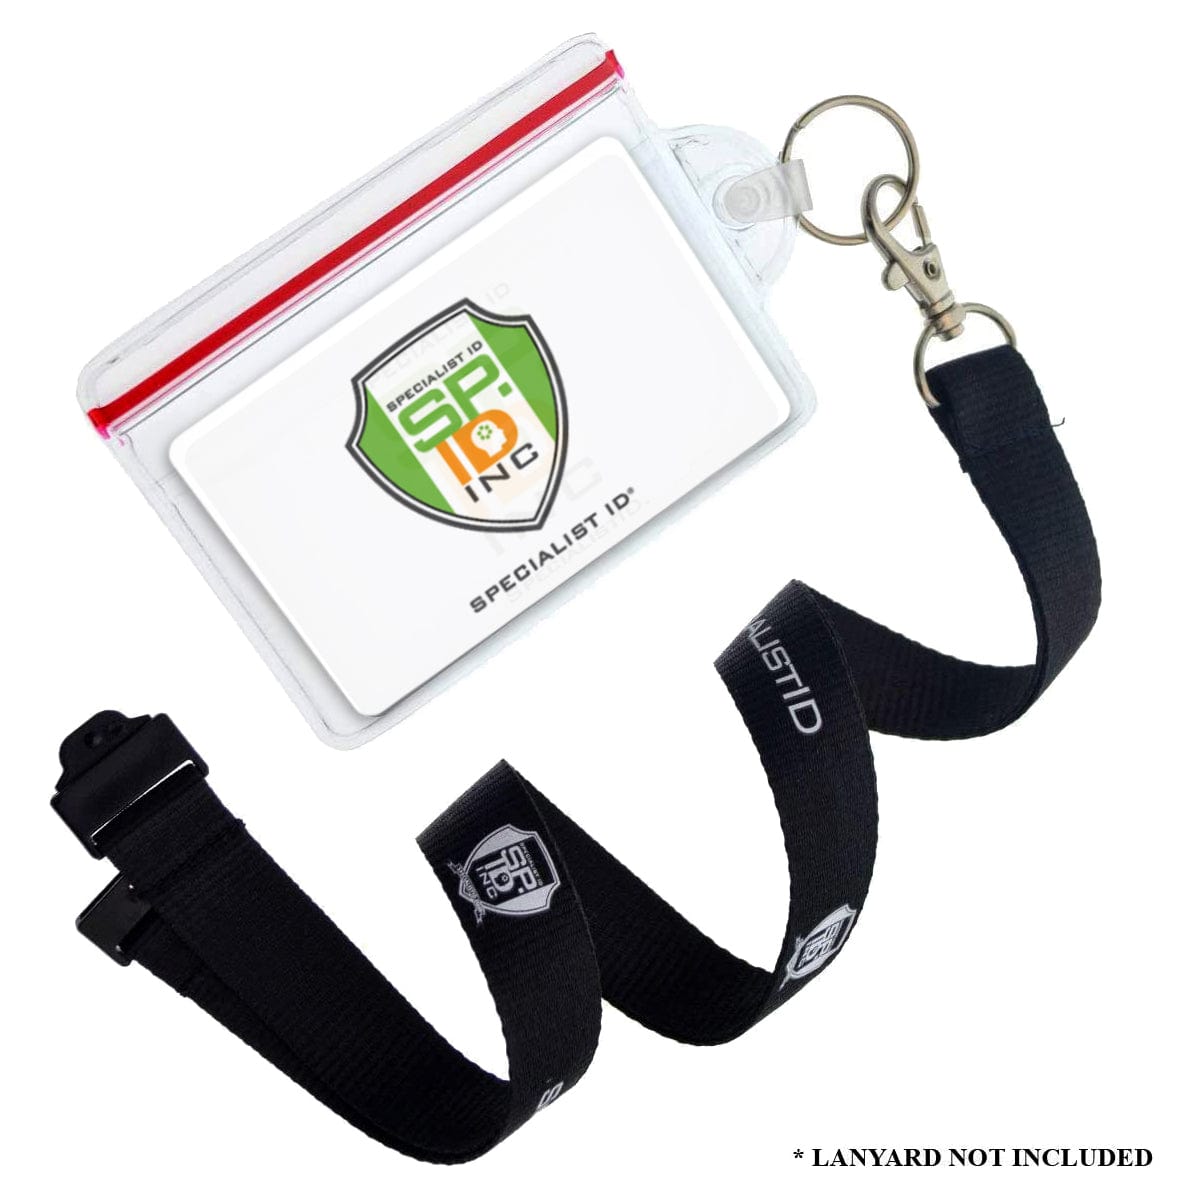  ID Badge Holder with Lanyards, Horizontal Badge